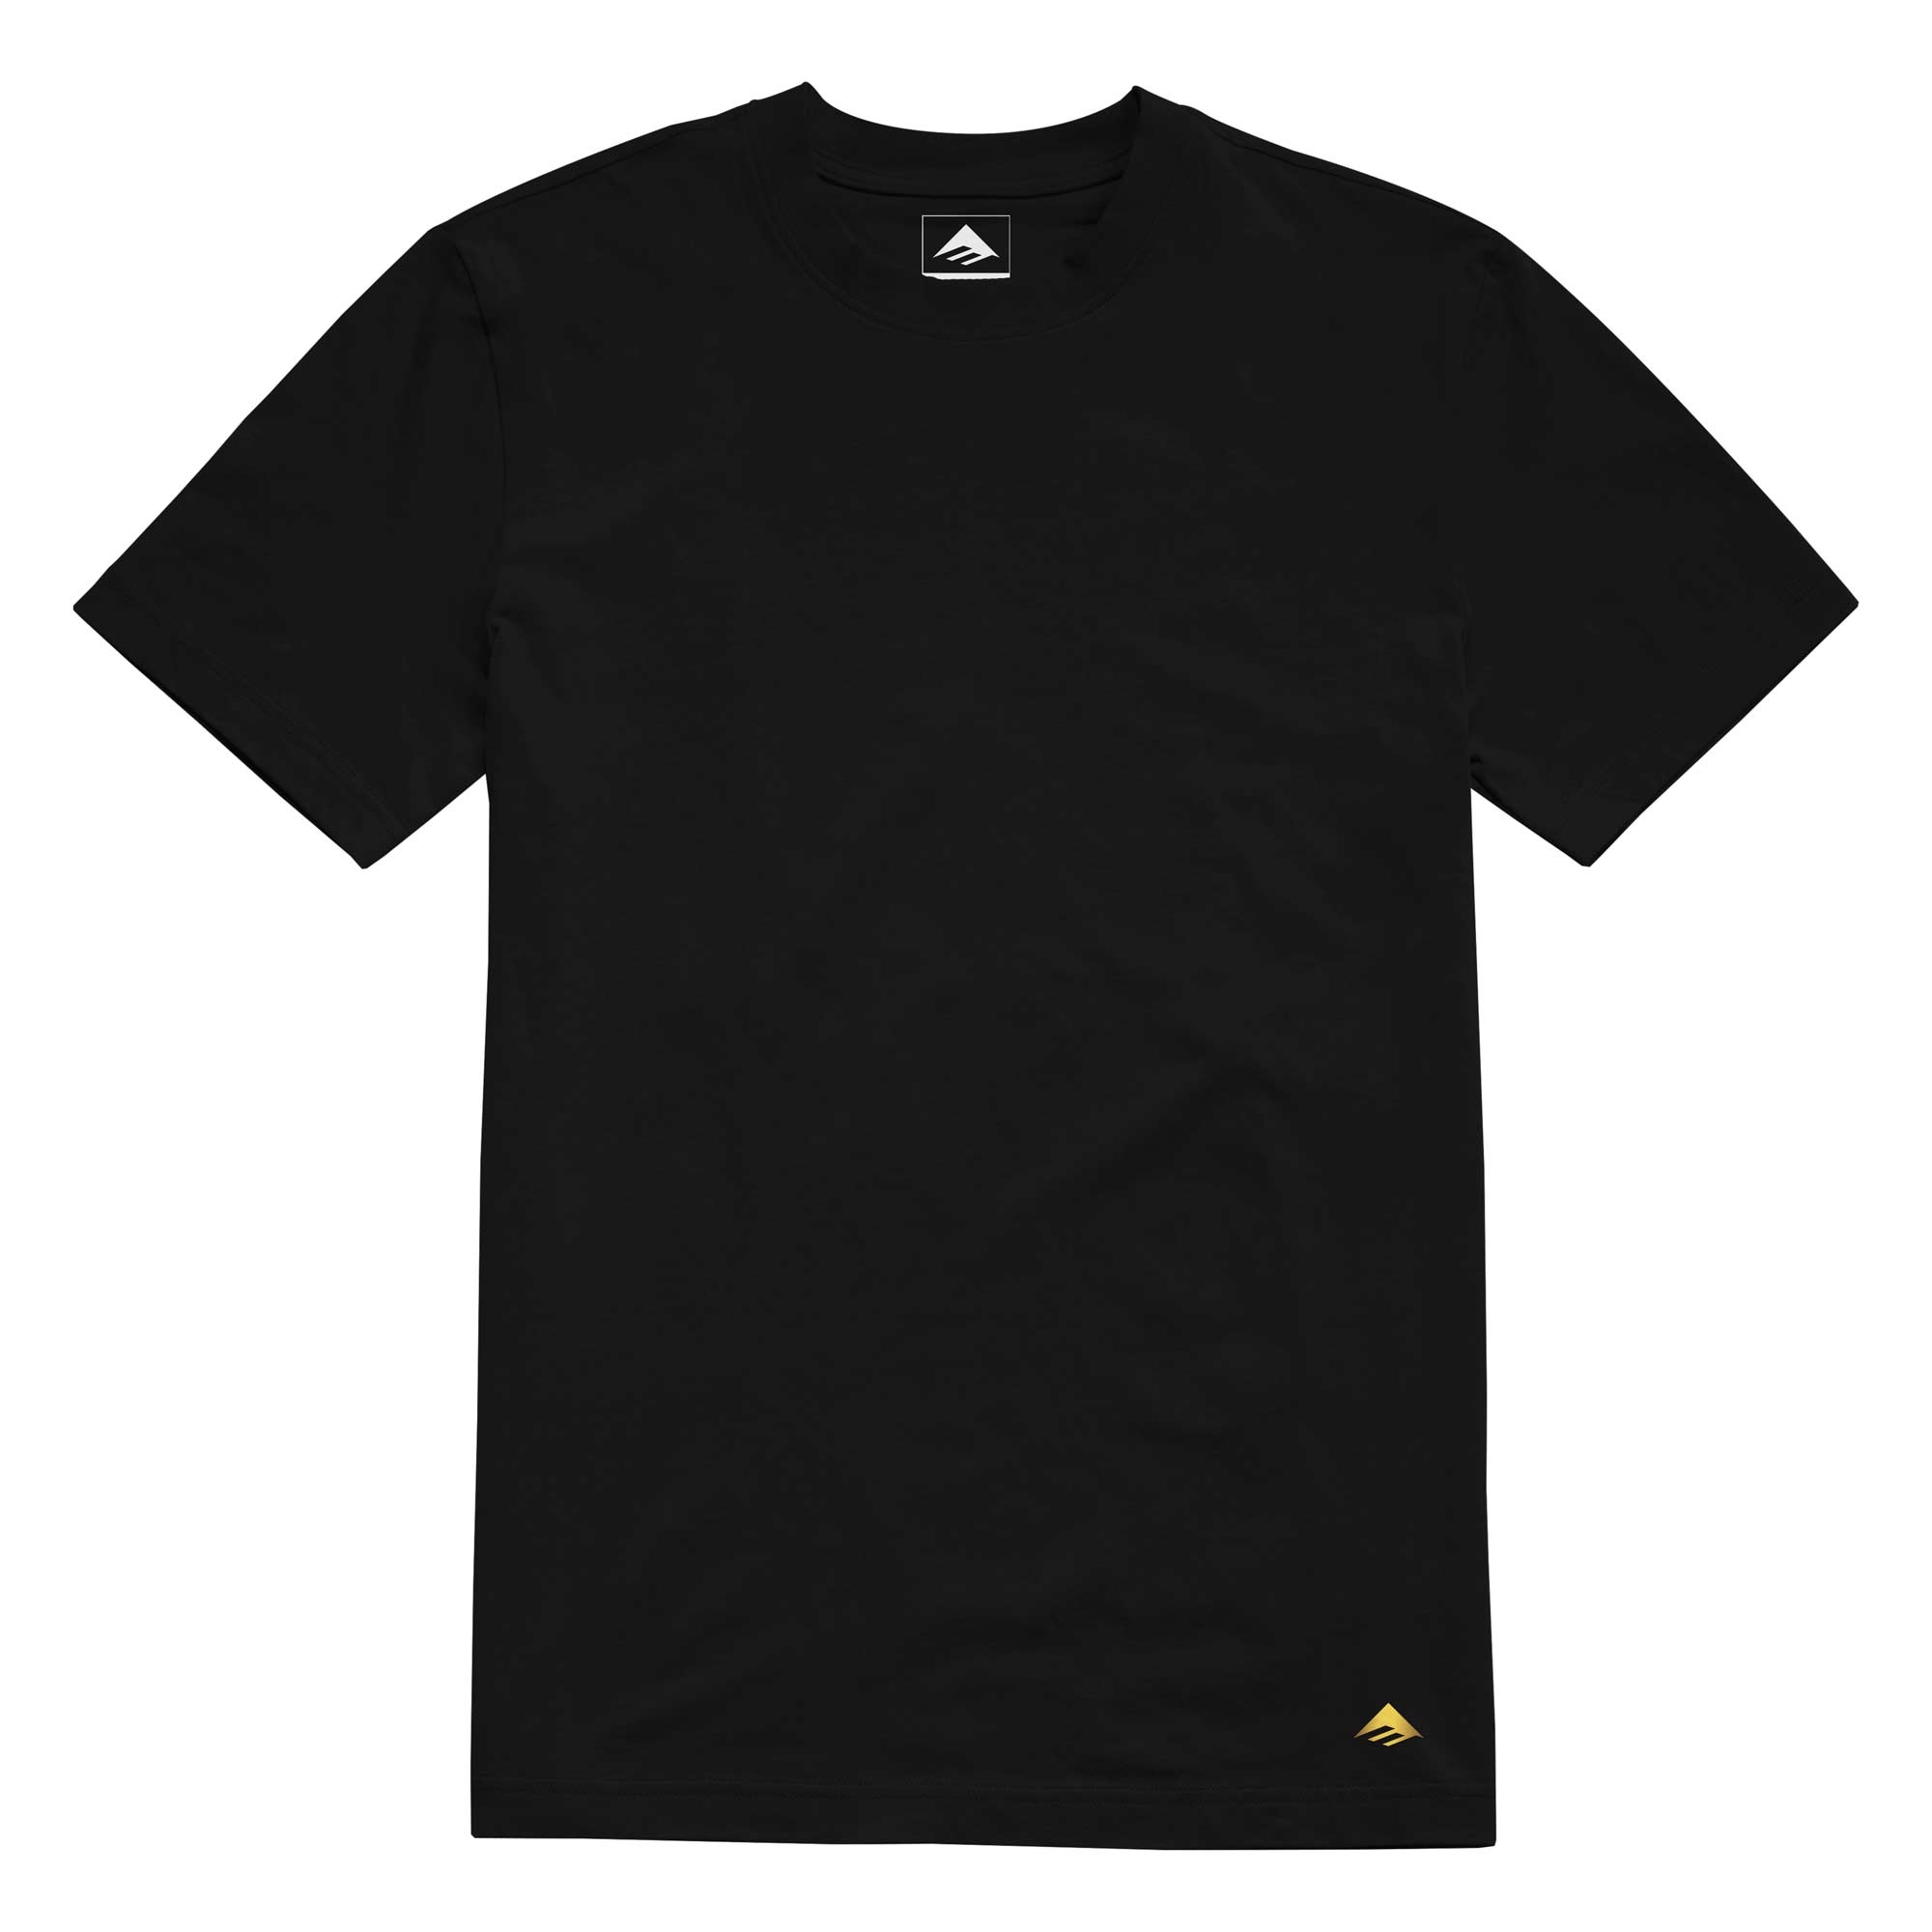 EMERICA T-Shirt MICRO TRIANGLE black